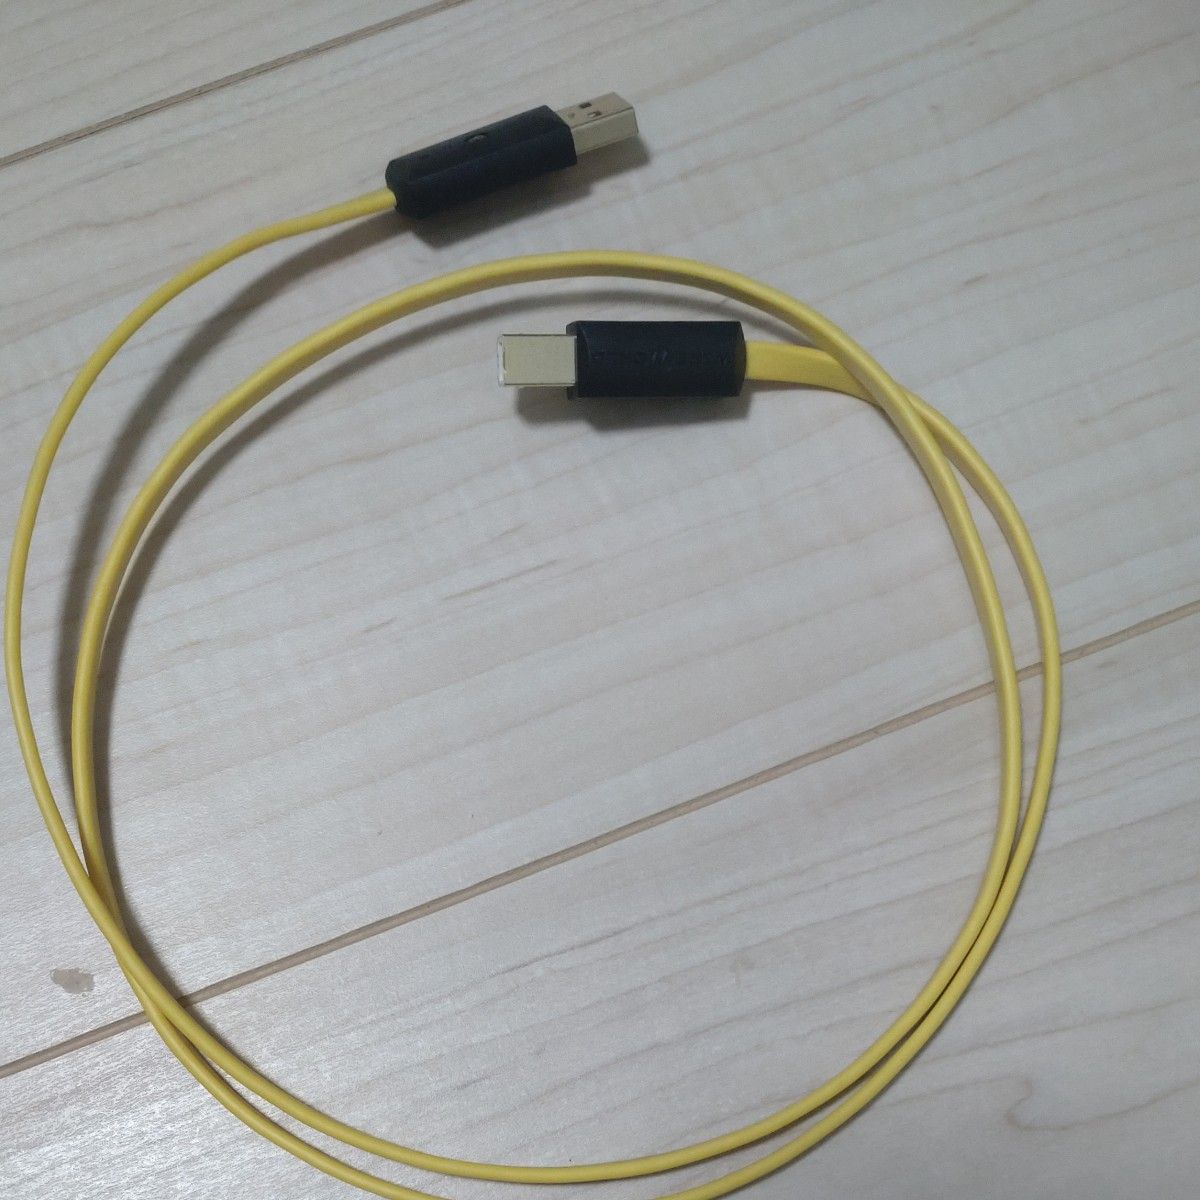 wireworld Chroma 8 USB Audio Cable 1.0M wire world